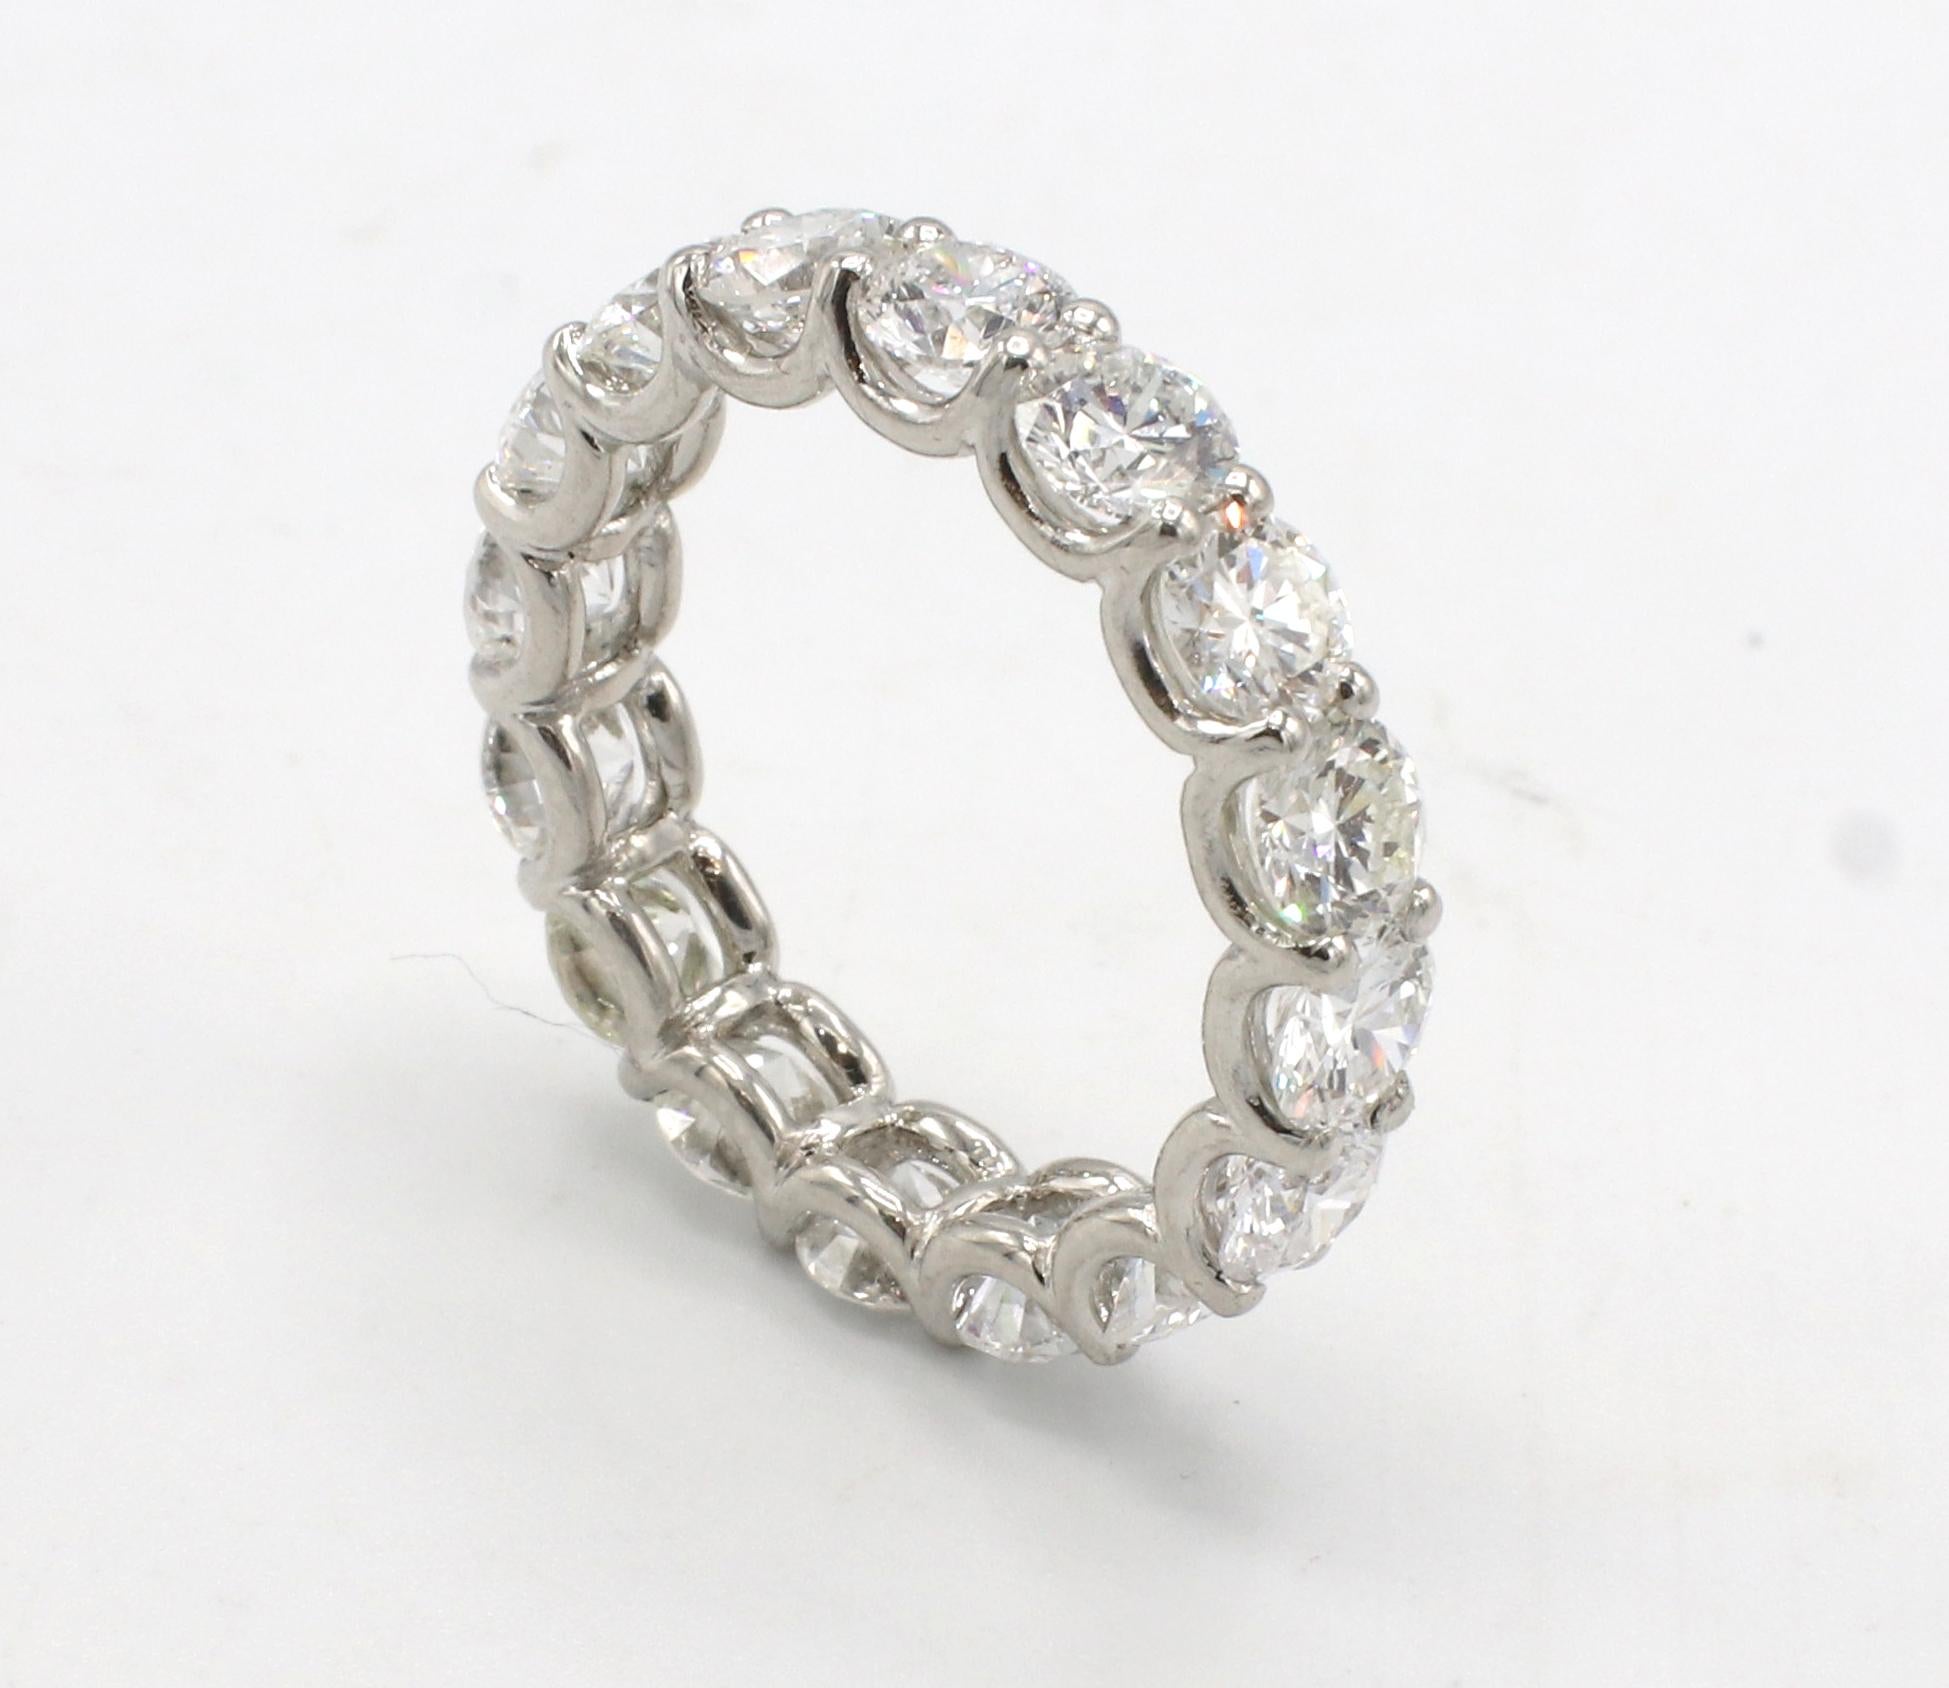 Platinum 4.88 Carat Round Natural Diamond Eternity Band Ring 
Metal: Platinum
Weight: 5.88 grams
Diamonds: 4.88 carats G-H VS (16 round brilliant natural diamonds)
Size: 6.25 (US)
